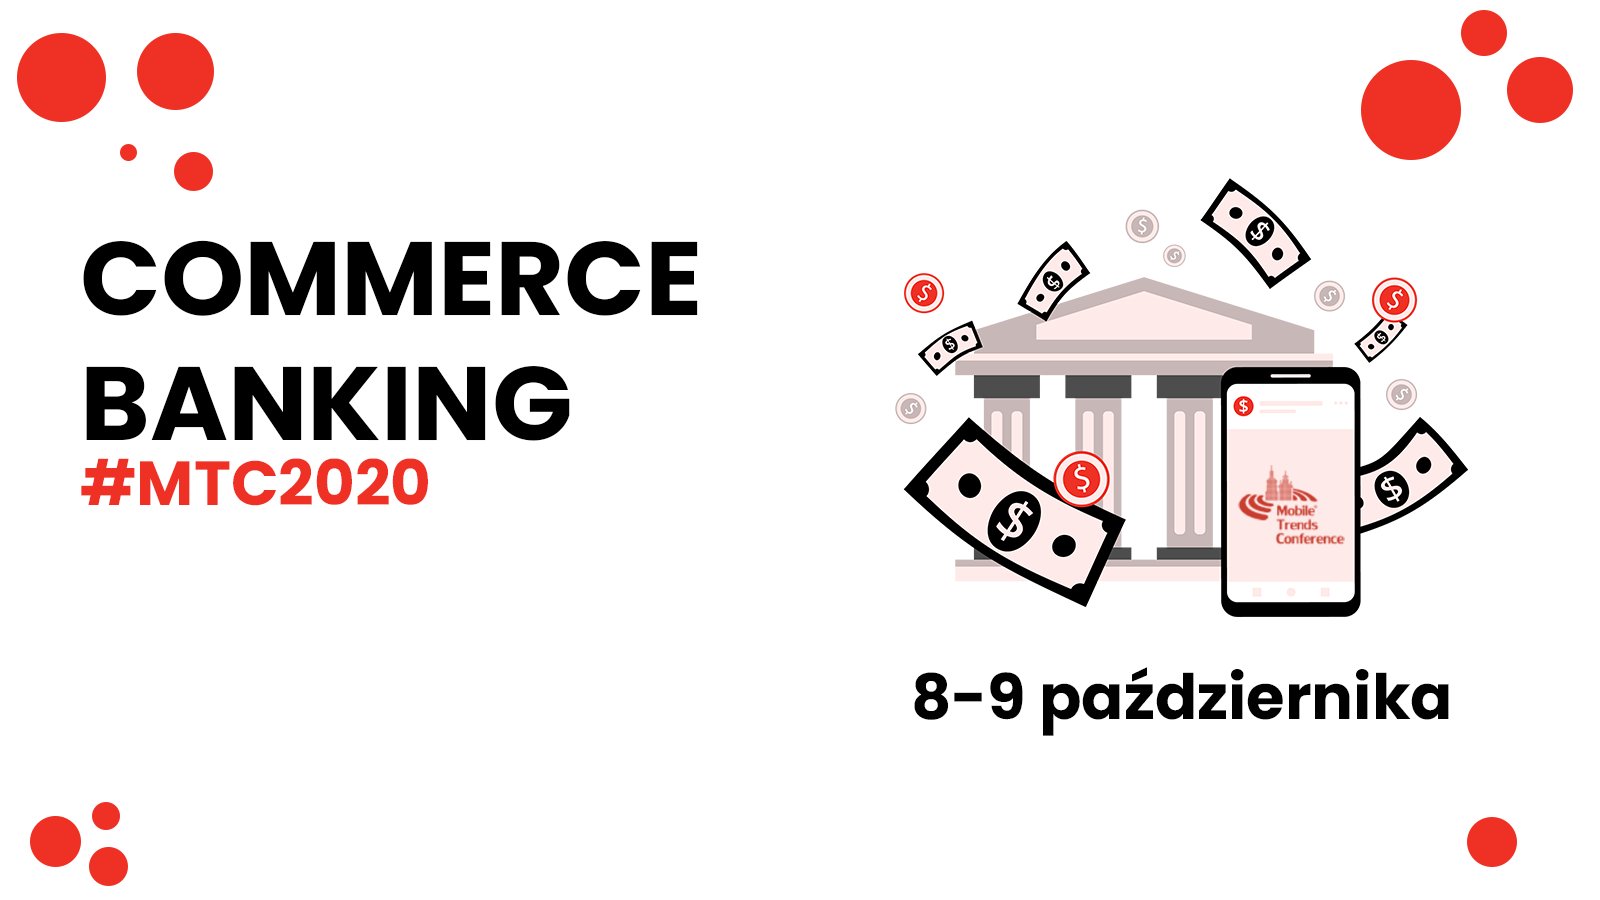 mobile-trends-conferece-commerce-banking